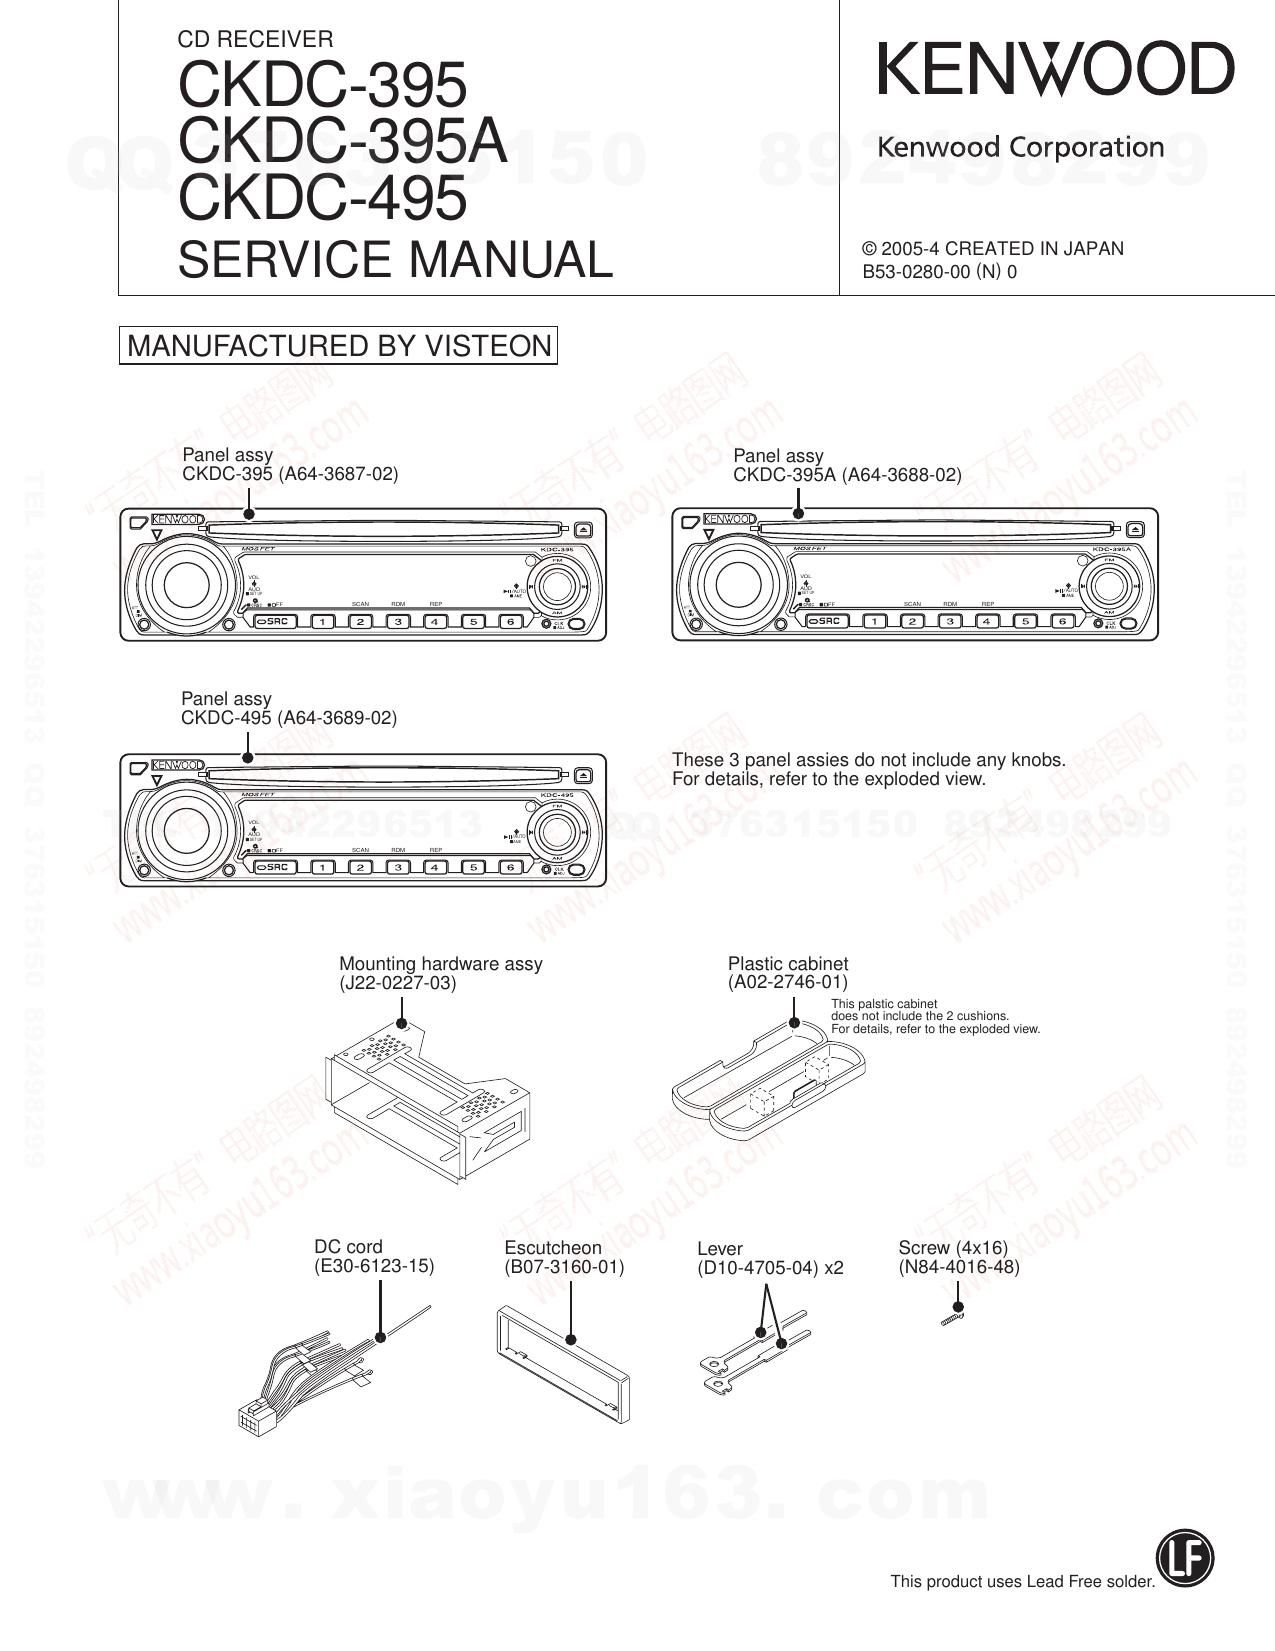 Kenwood CKDC 395 A Service Manual